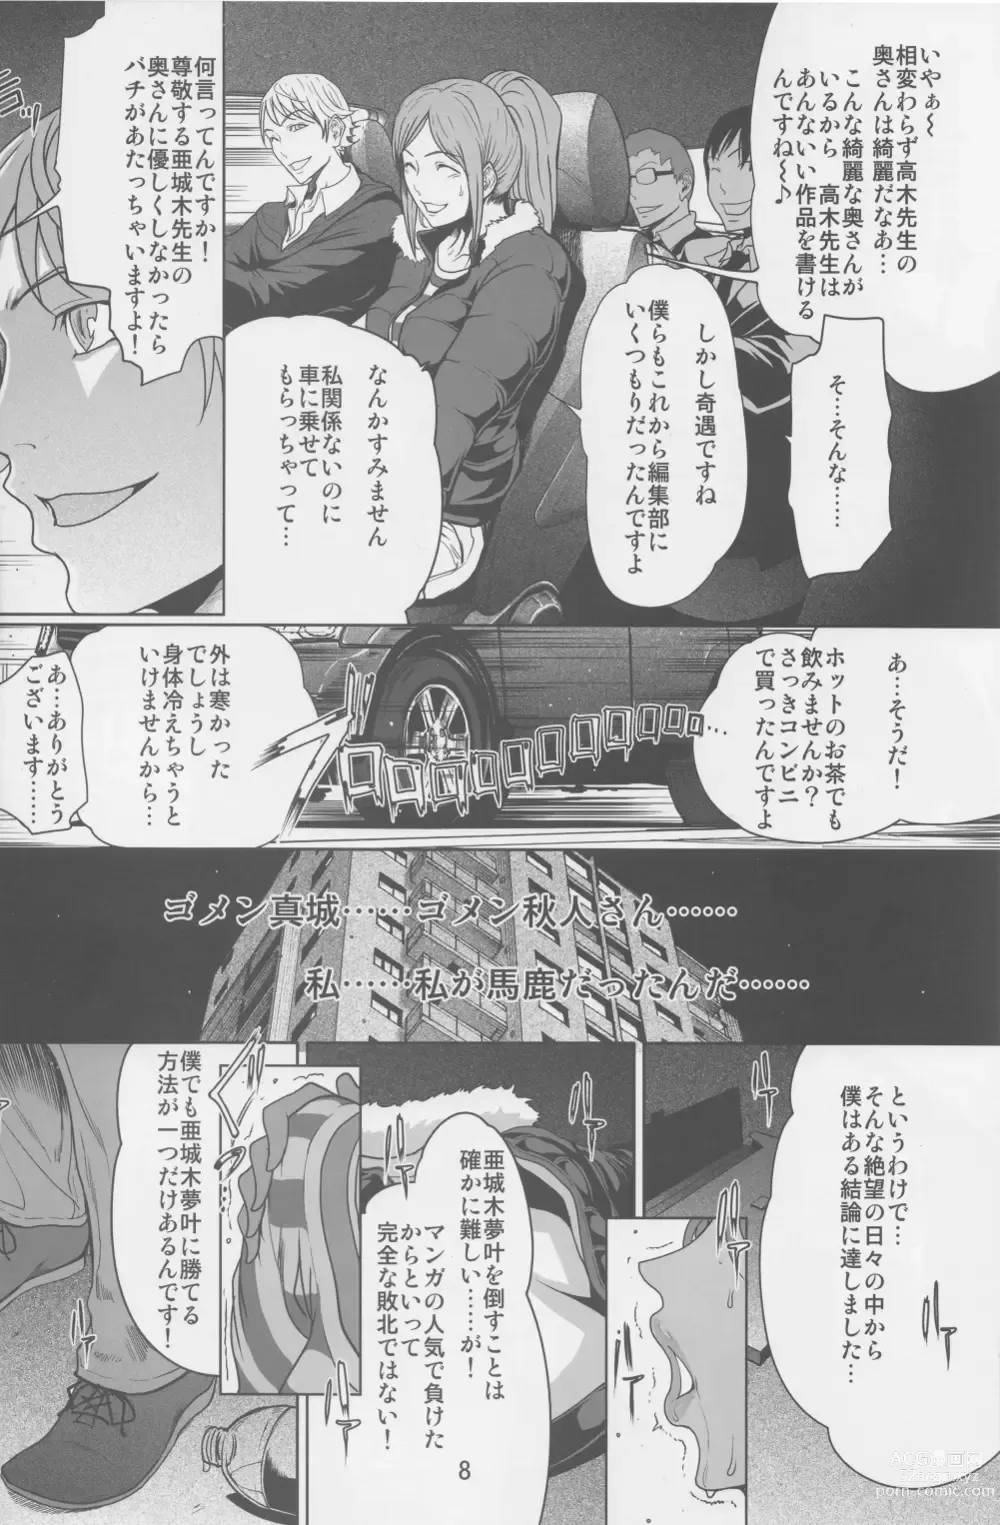 Page 7 of doujinshi BAKULOVE. 06